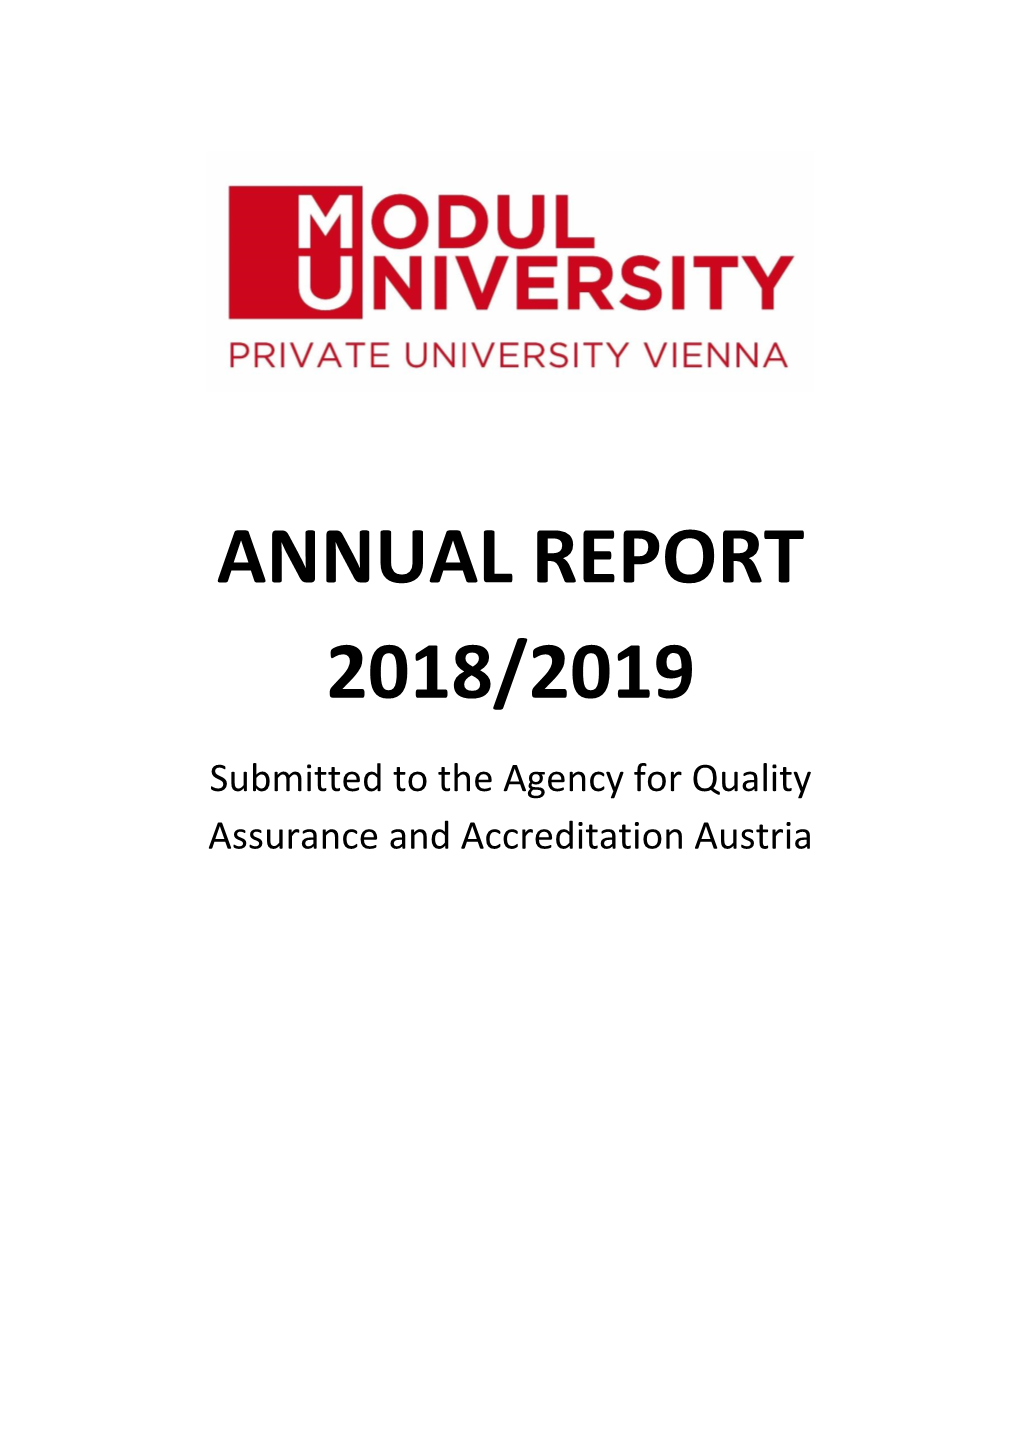 Modul University Vienna's Annual Report 2018-2019